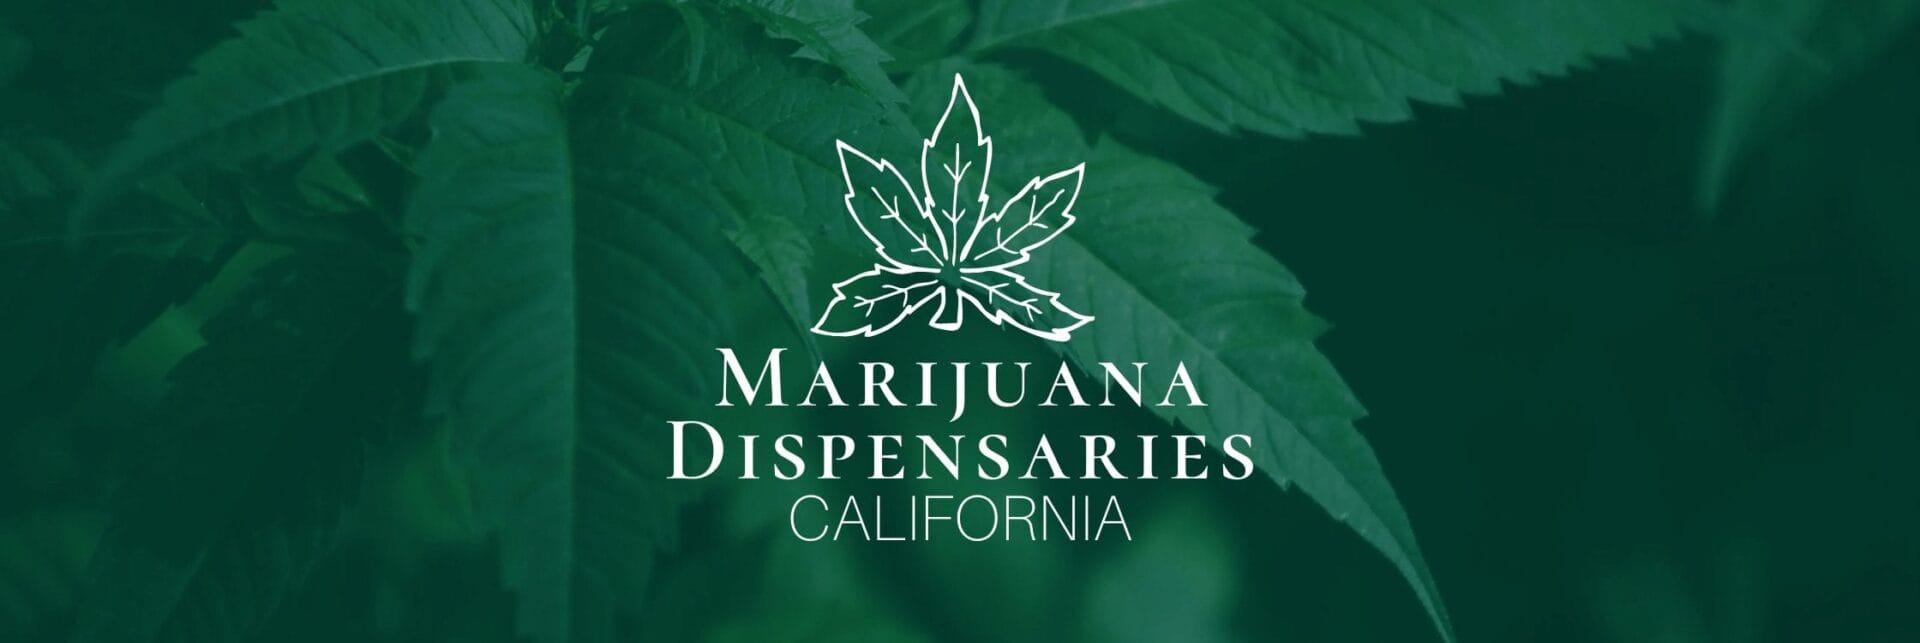 Marijuana Dispensaries in California